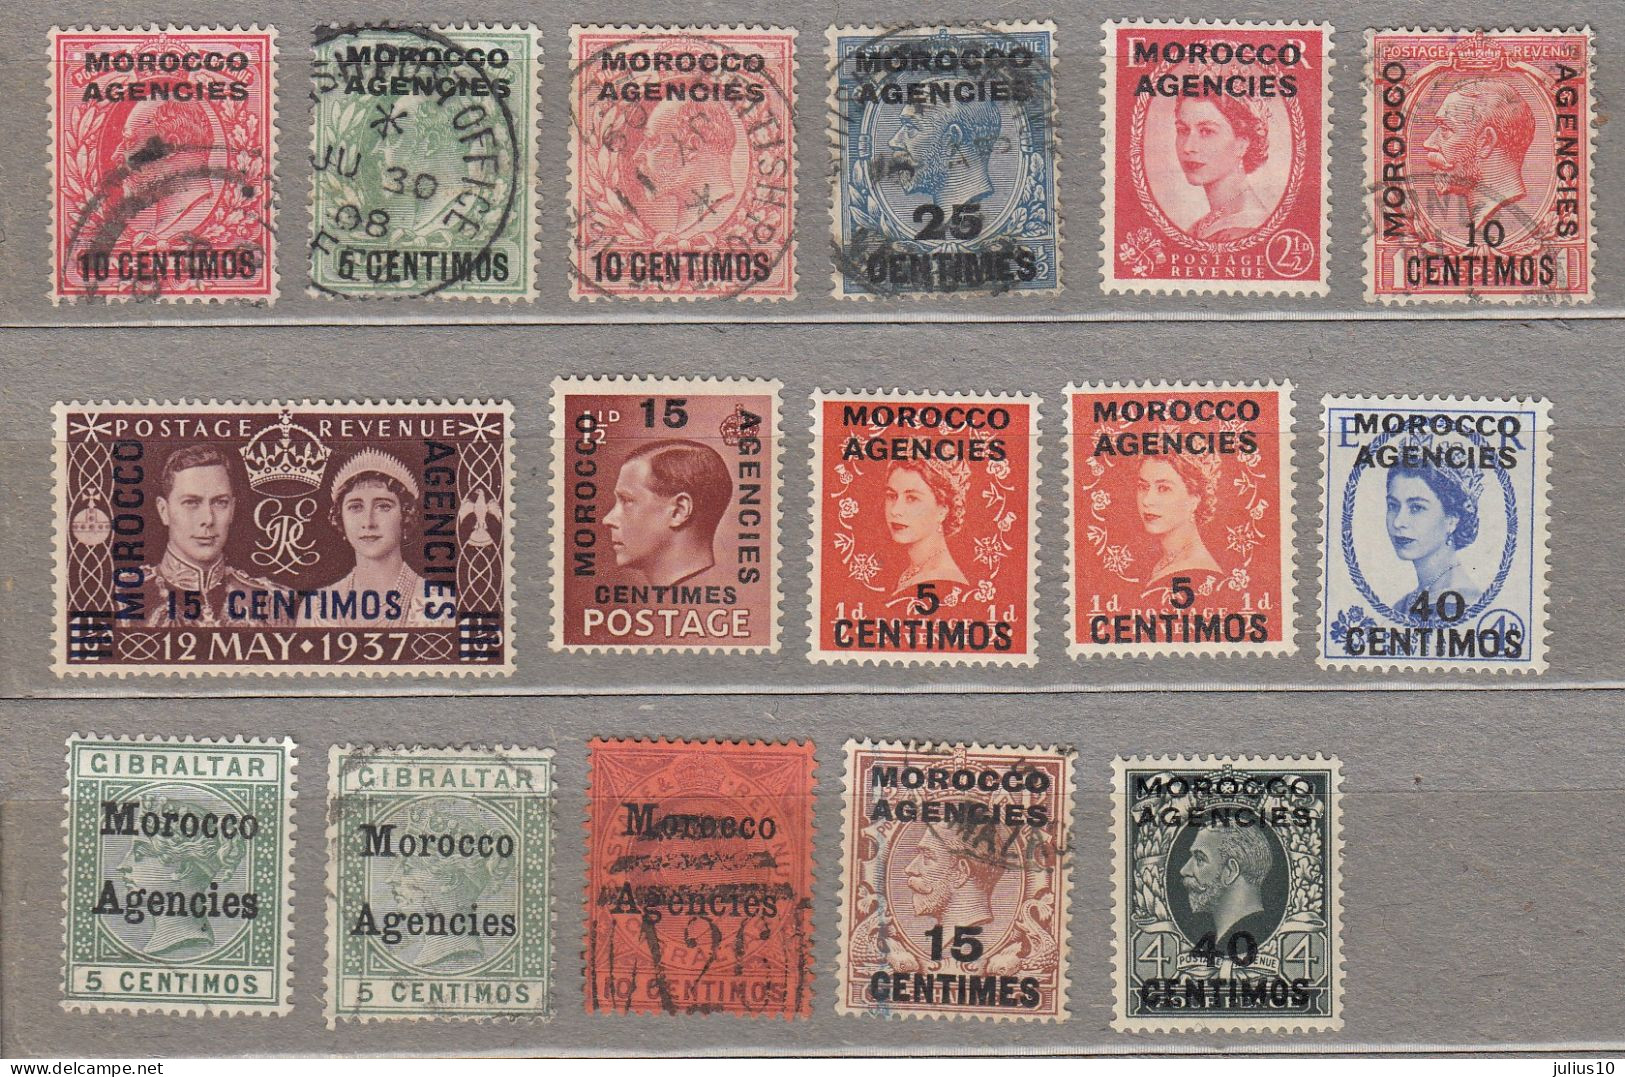 BRITISH COLONIES – MAROCO Mint/Used (MH*/o) #33935 - Morocco Agencies / Tangier (...-1958)